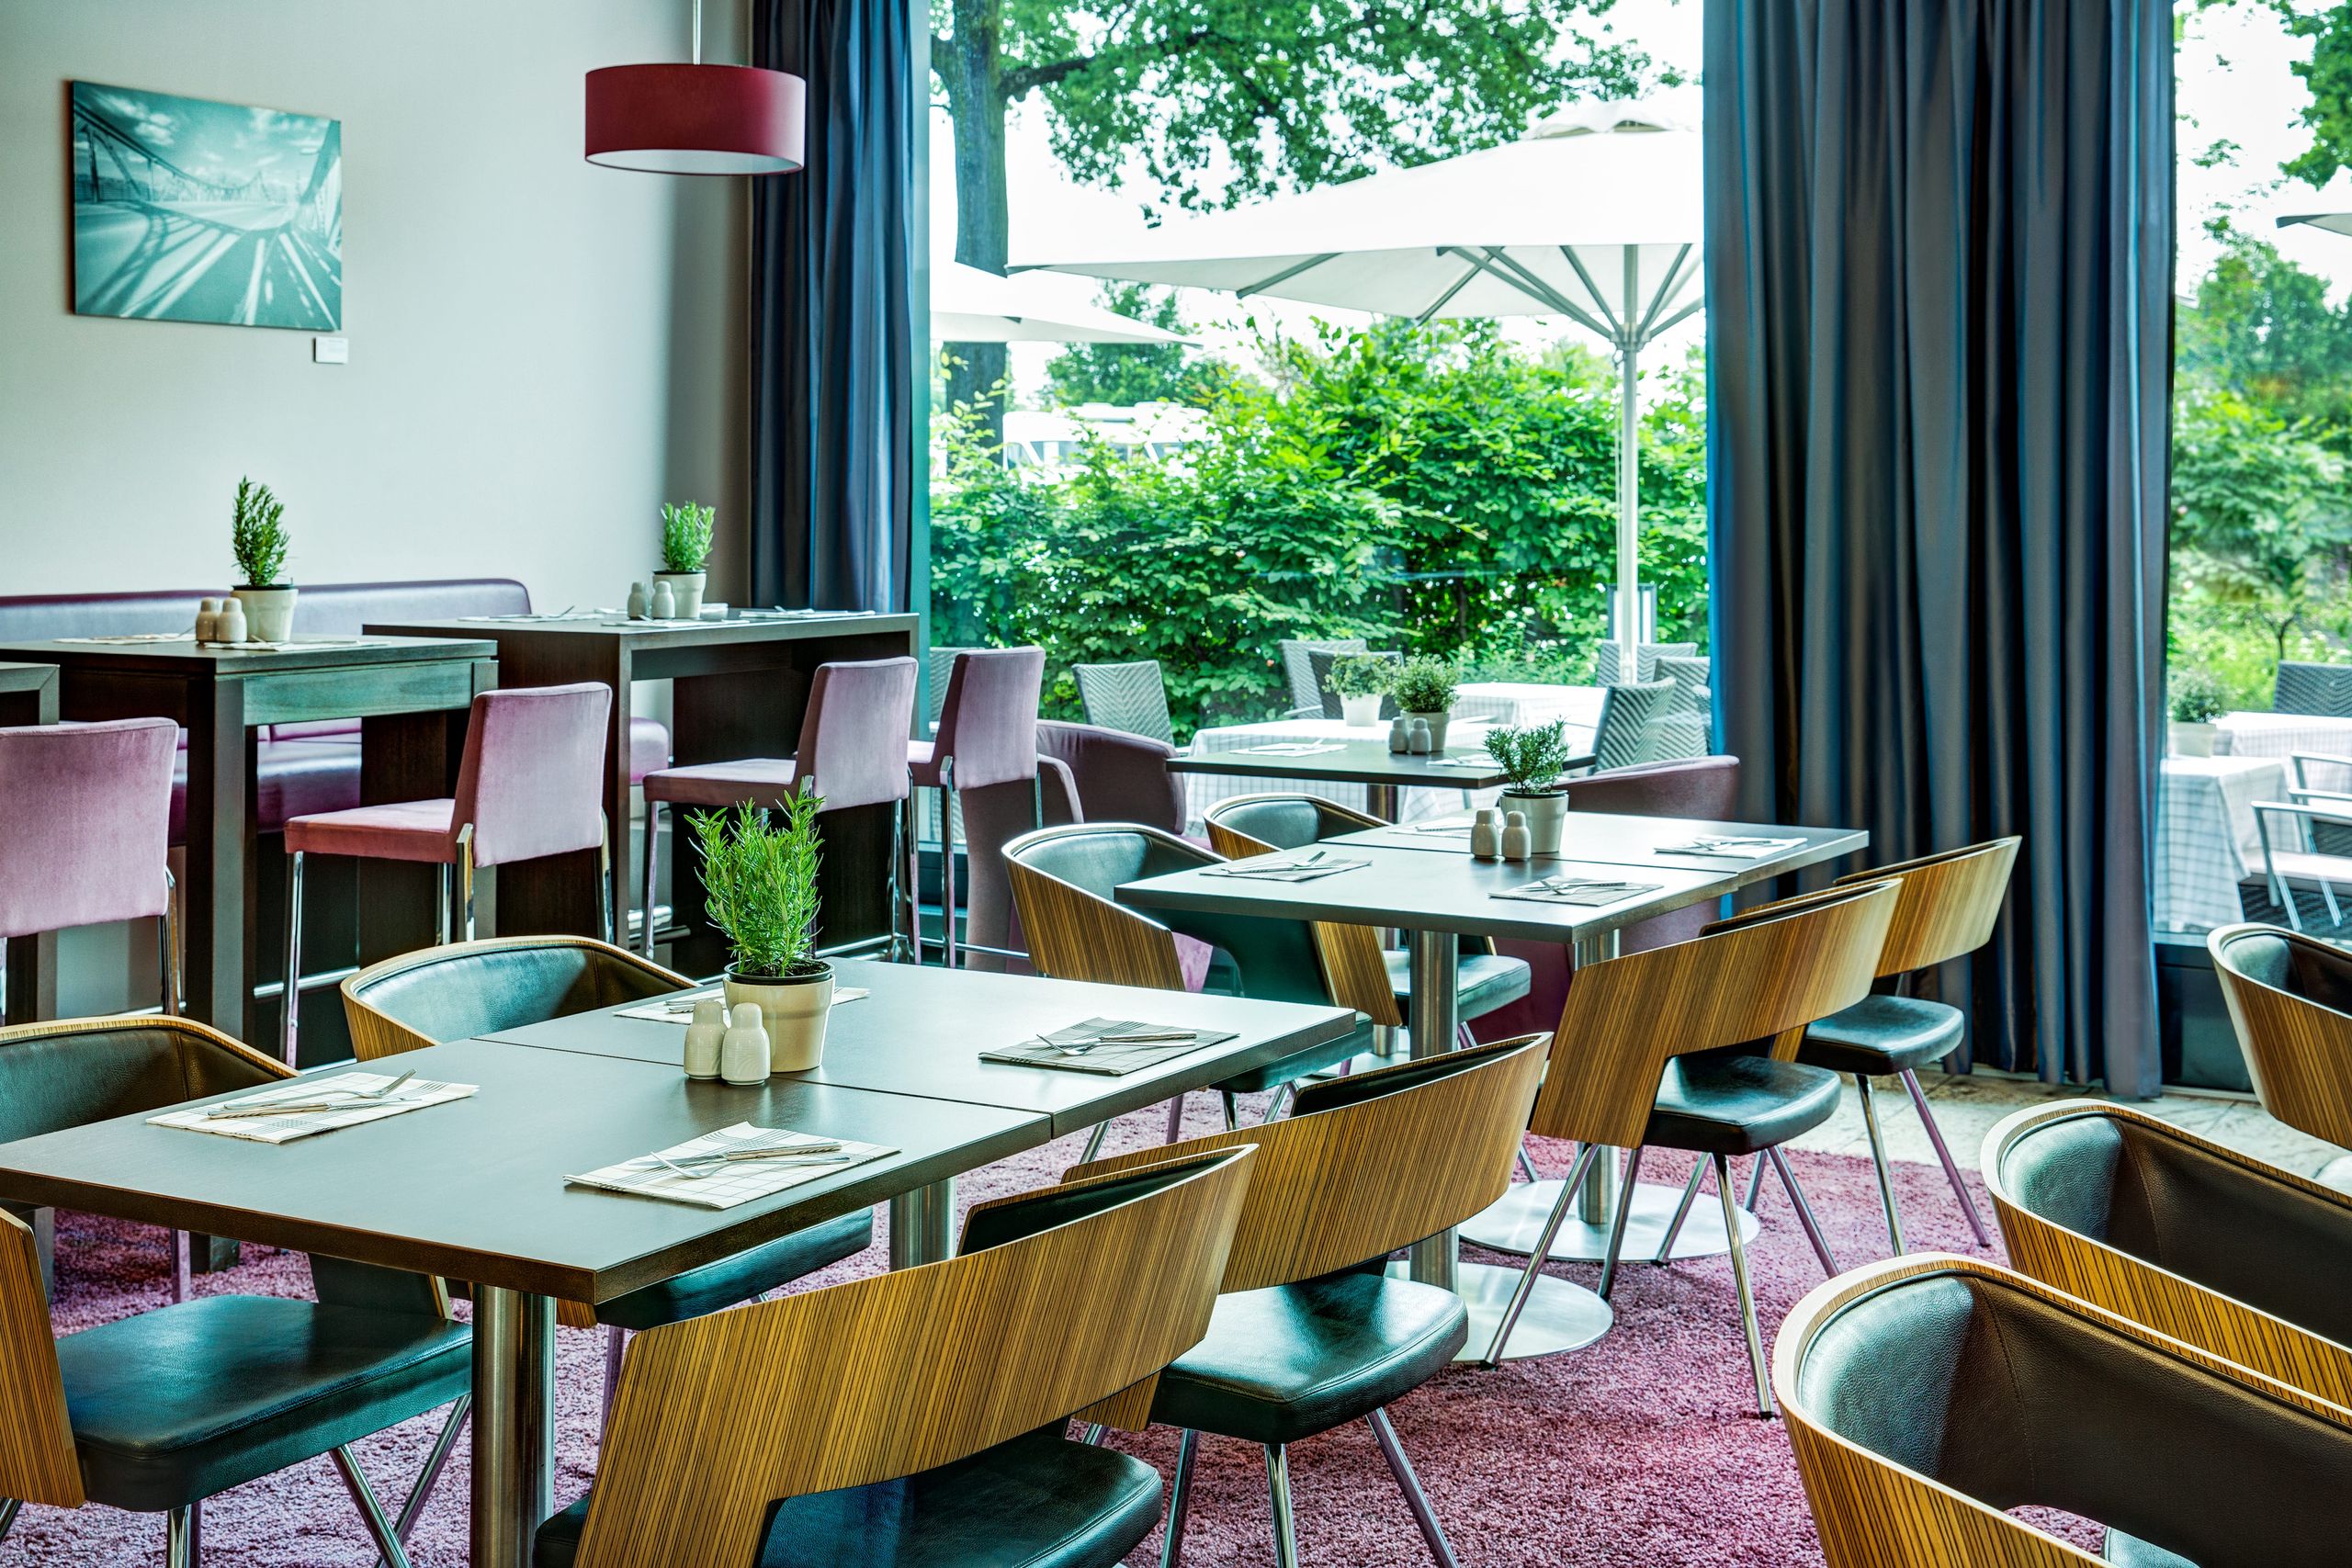 IntercityHotel 柏林-勃兰登堡-机场-餐厅